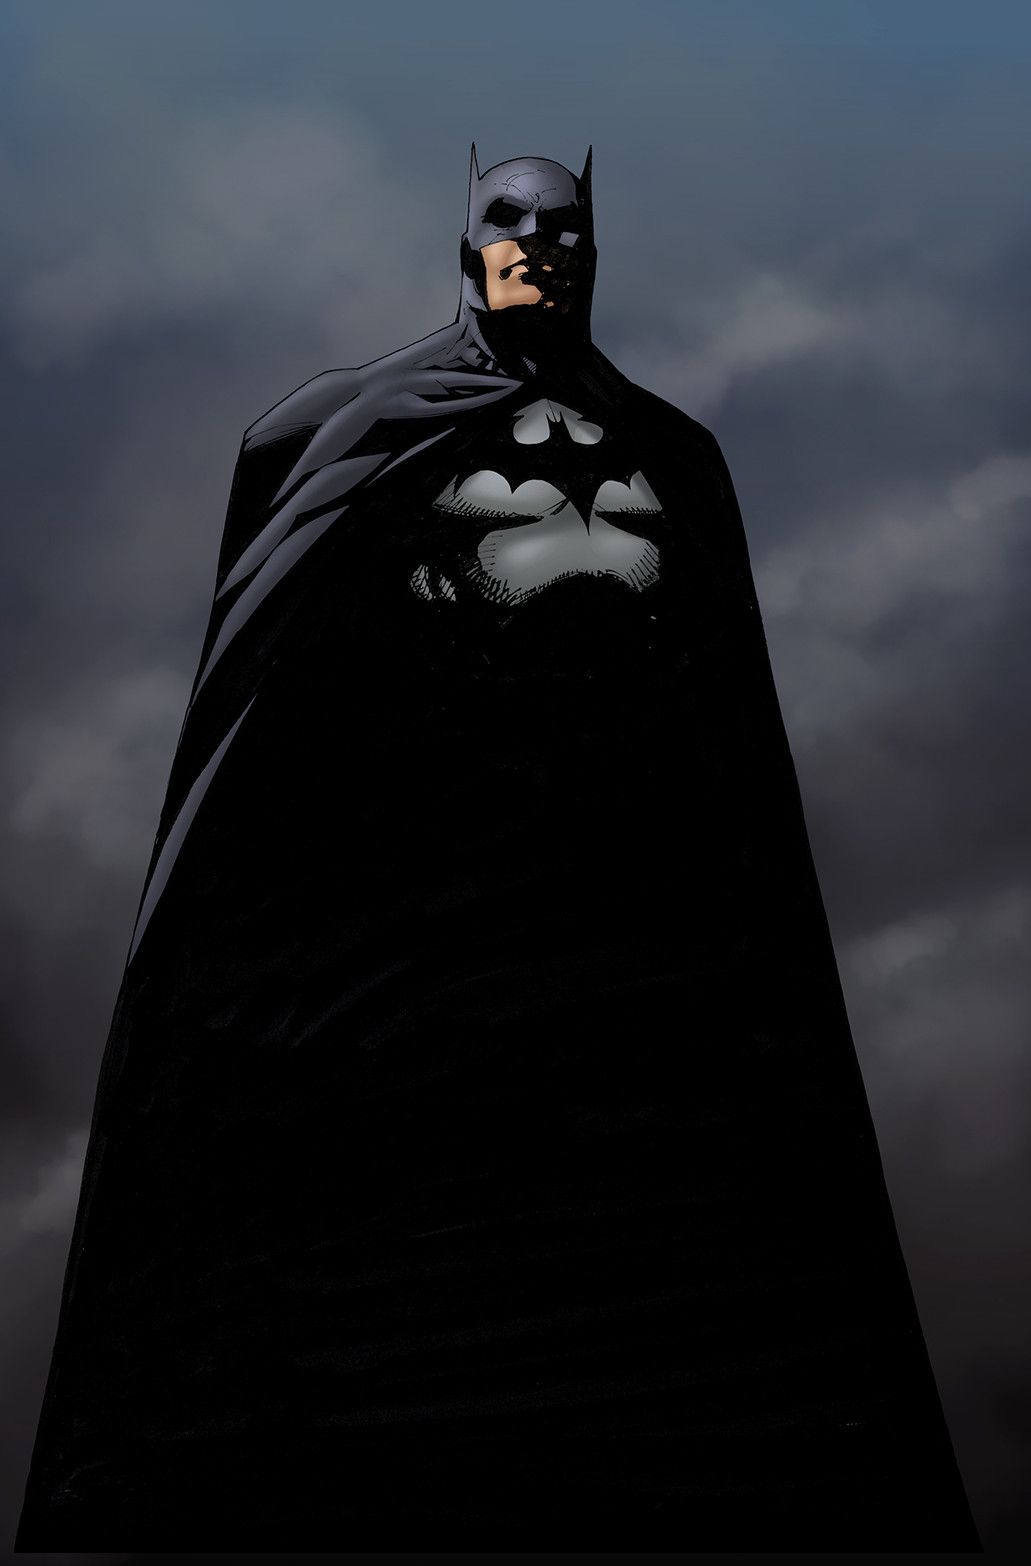 Batman (Hush Harcover collection cover) by Matt James. Batman hush, Batman, Batman poster